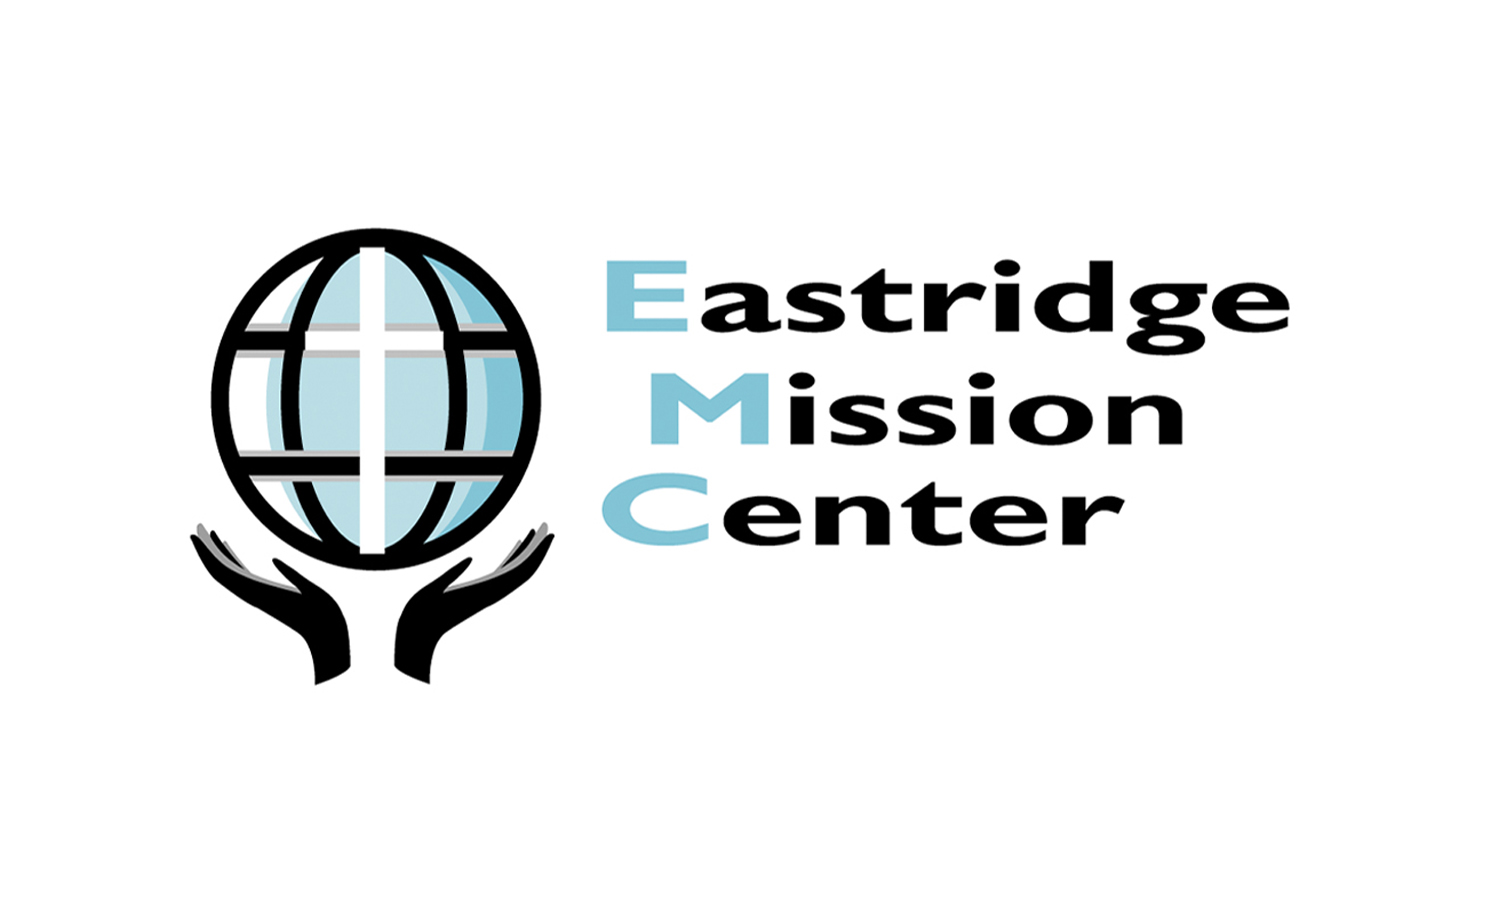 Eastridge Mission Center